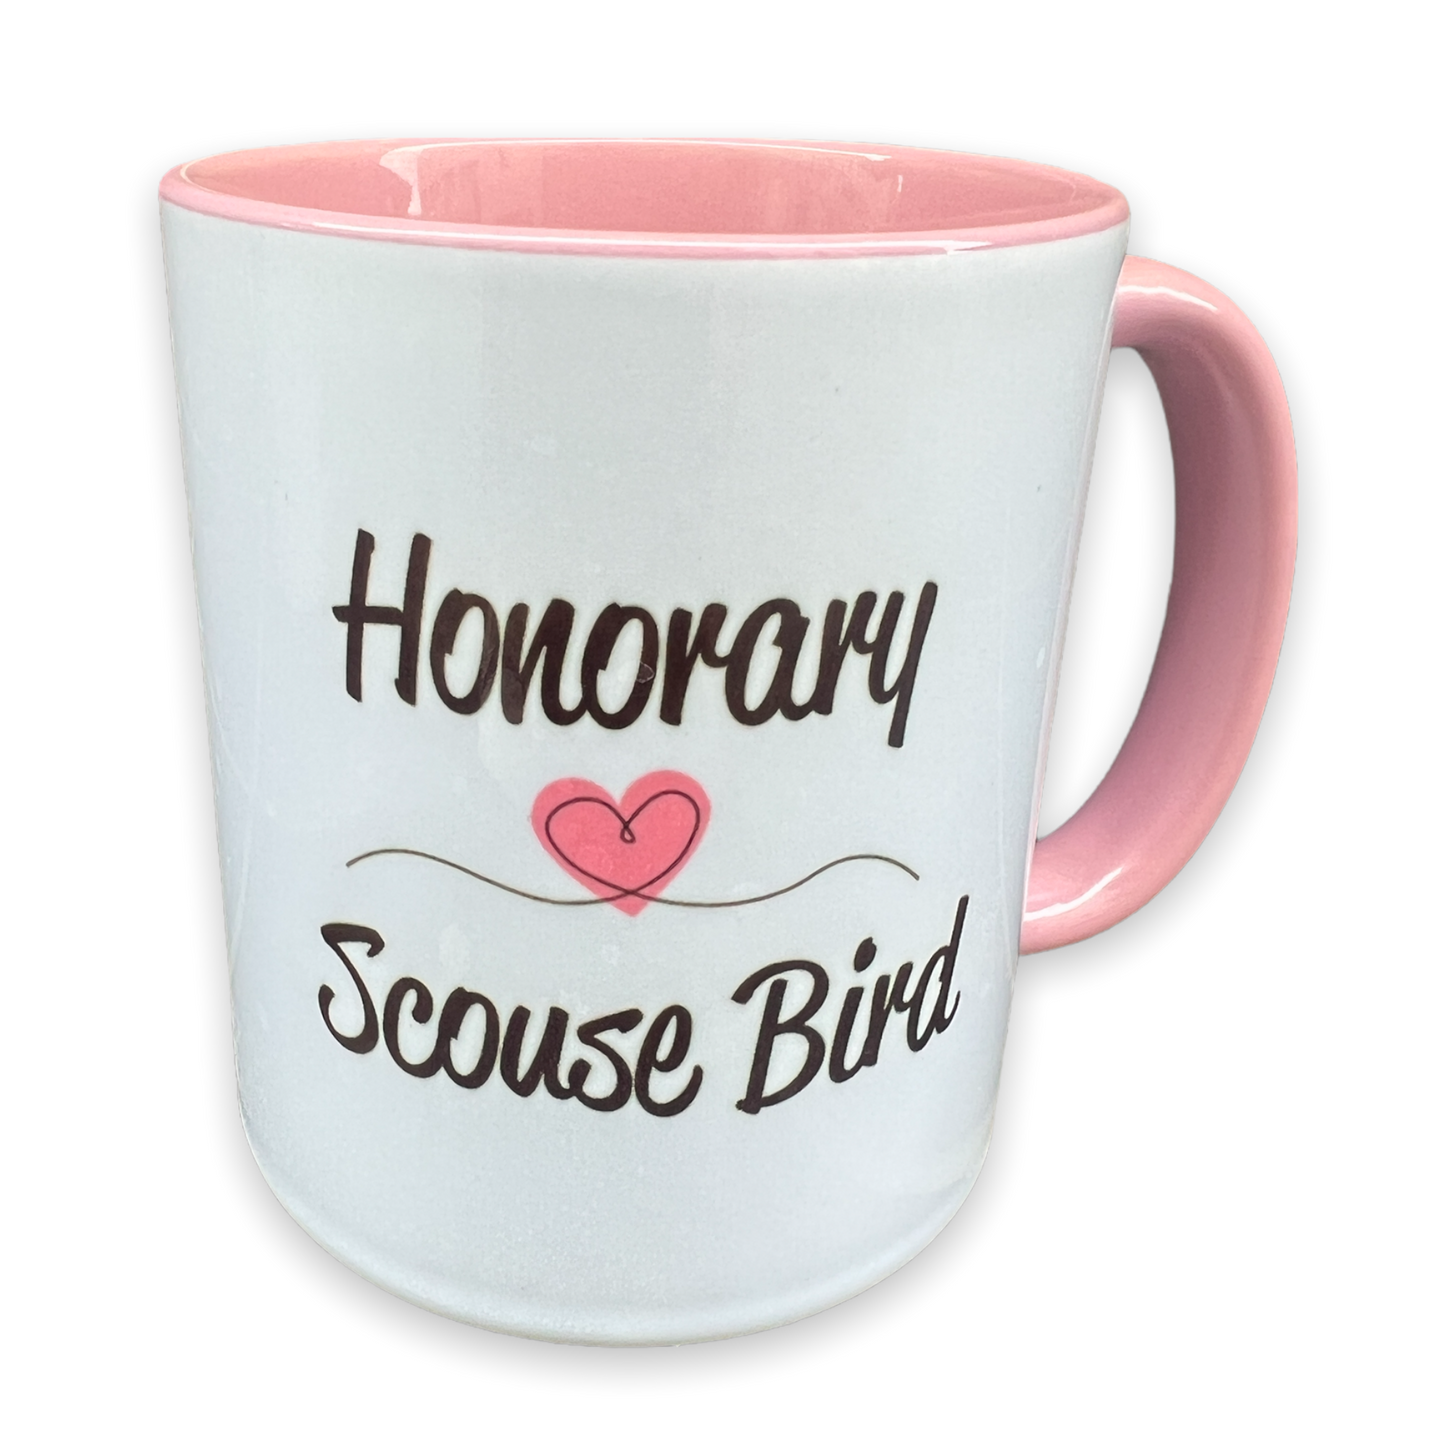 Honorary Scouse Bird Mug